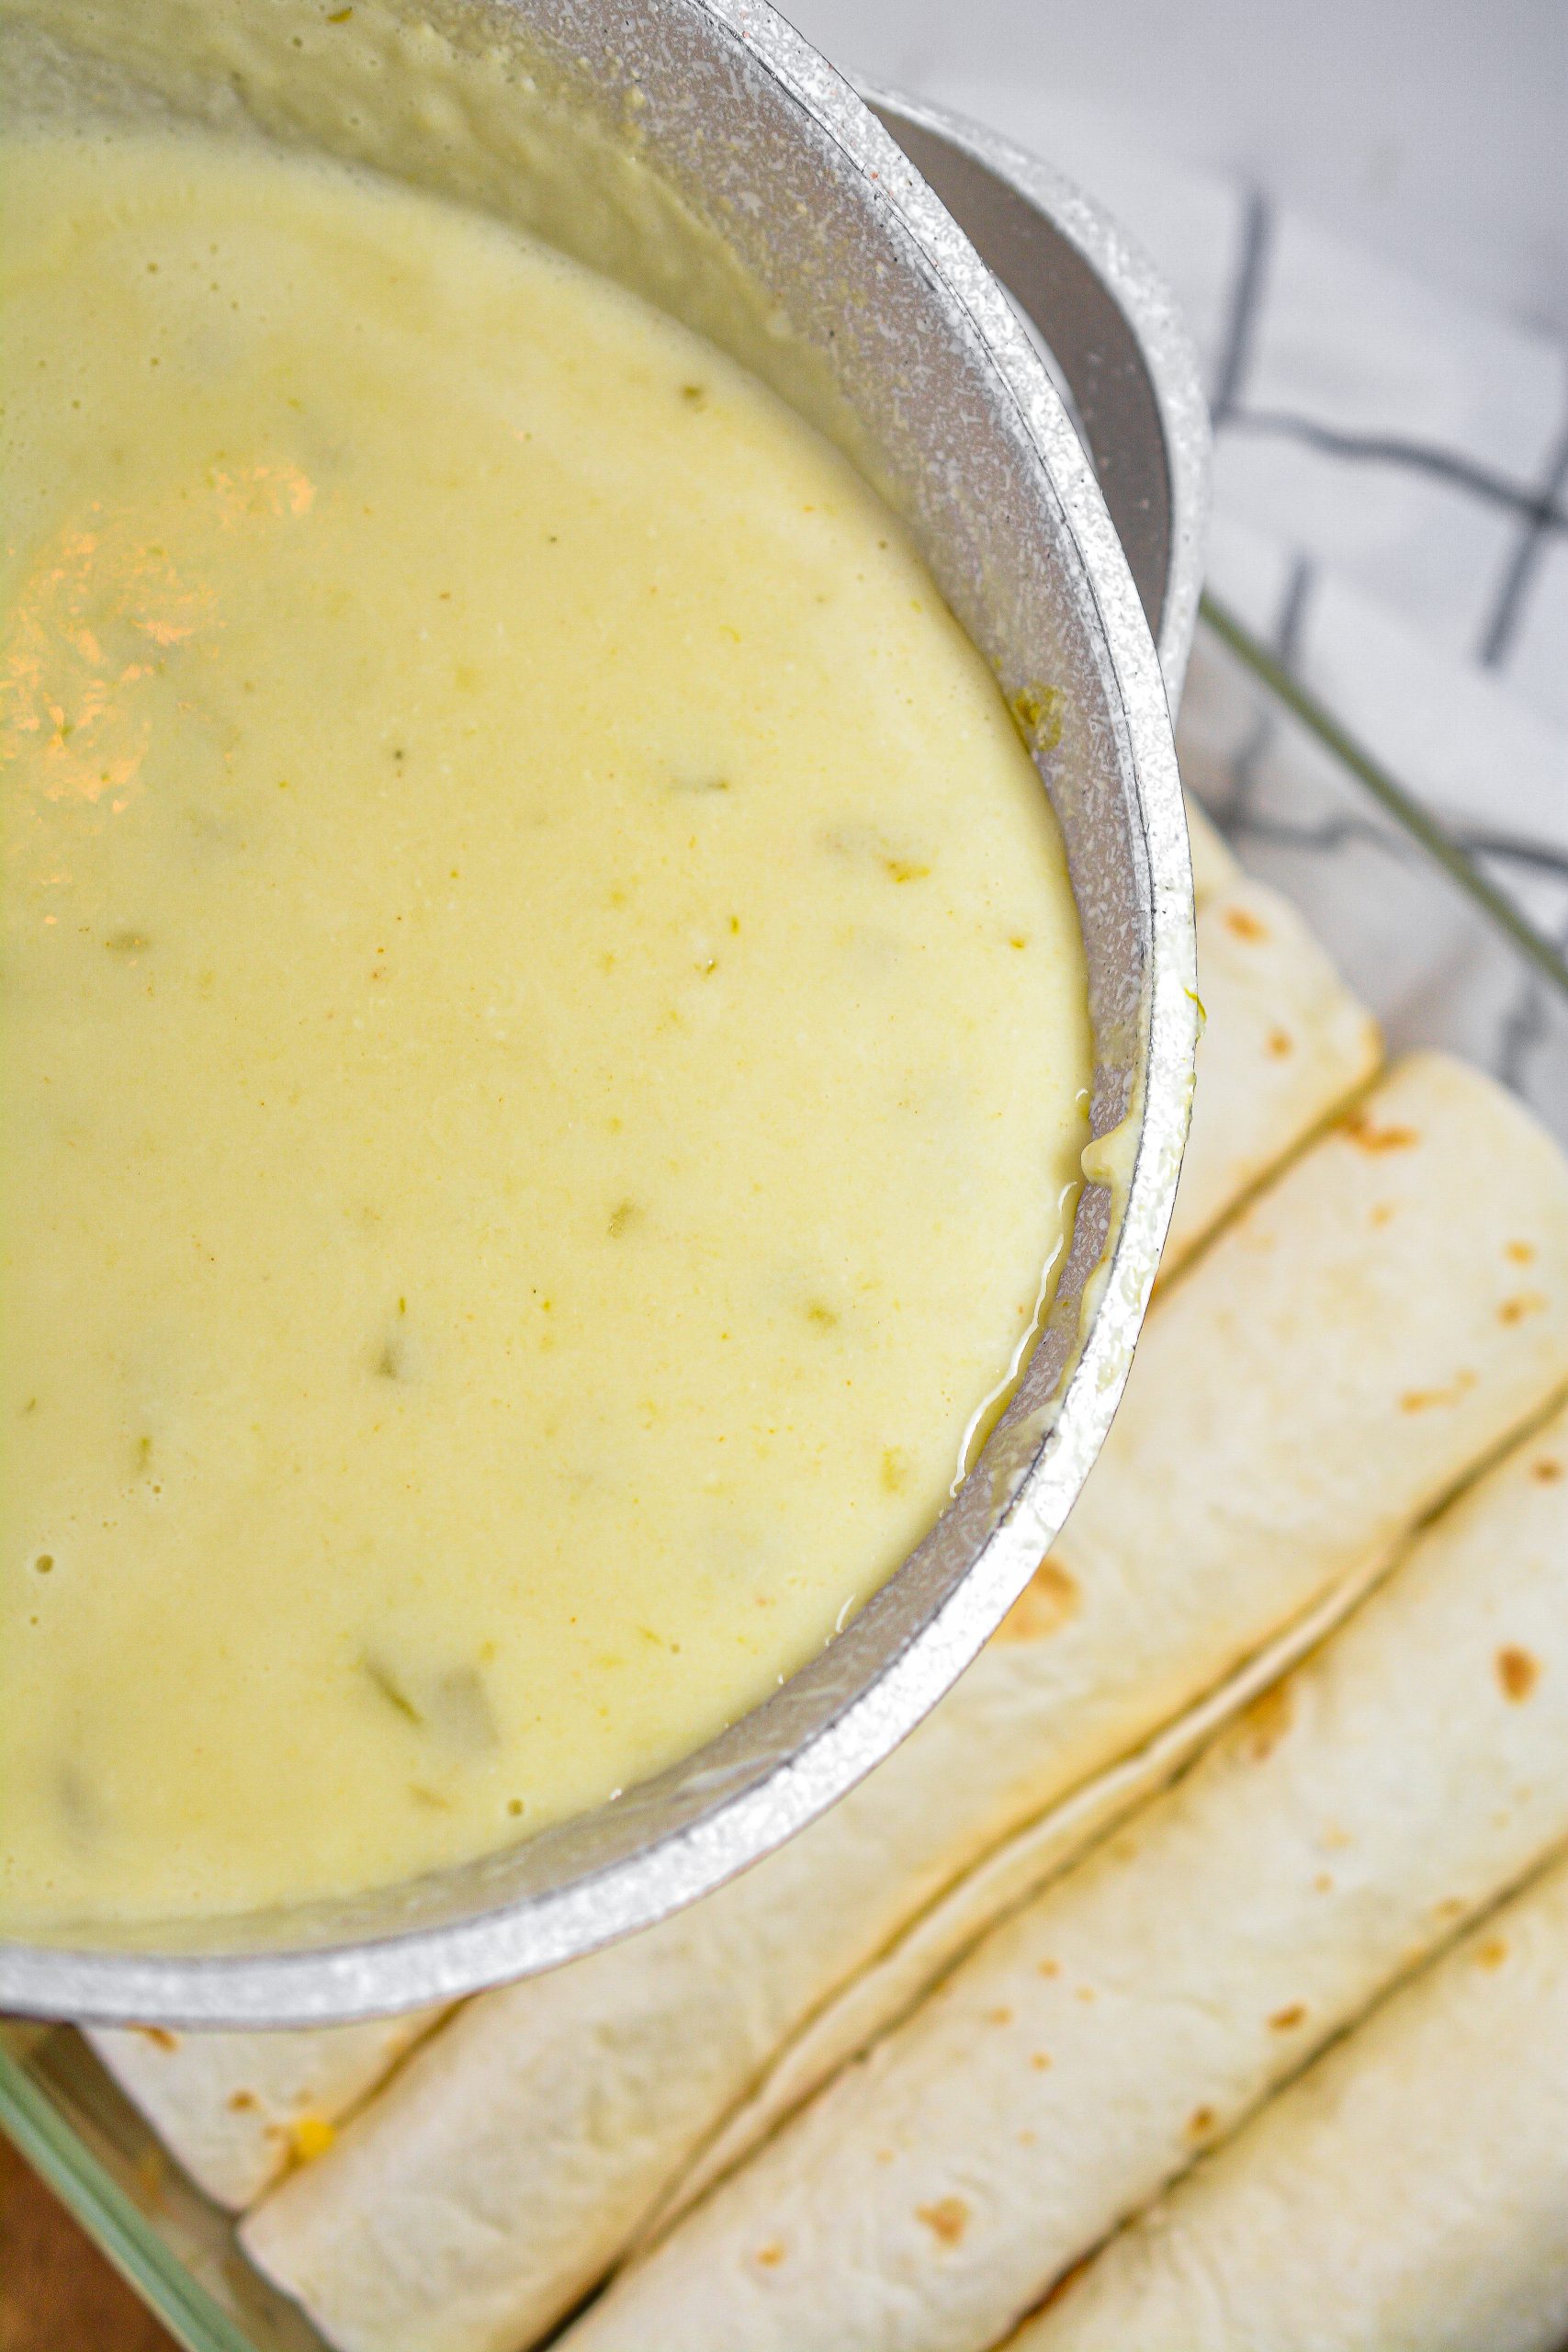 Pour the sauce over the tortillas.